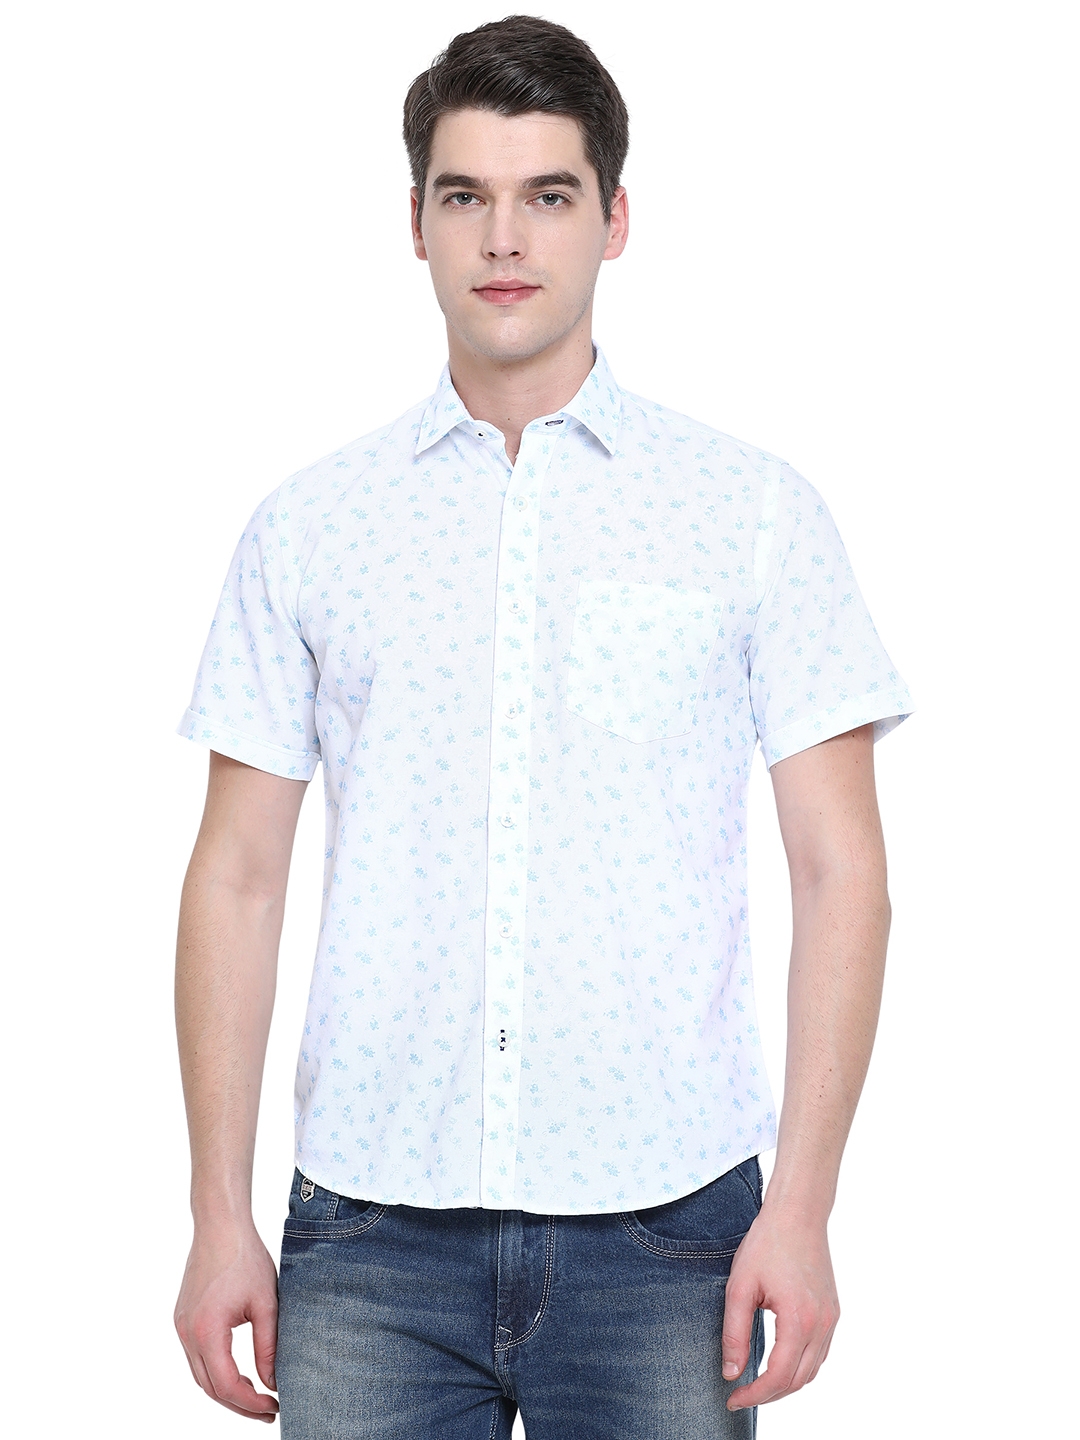 Greenfibre | Bright White Printed Slim Fit Casual Shirt | Greenfibre